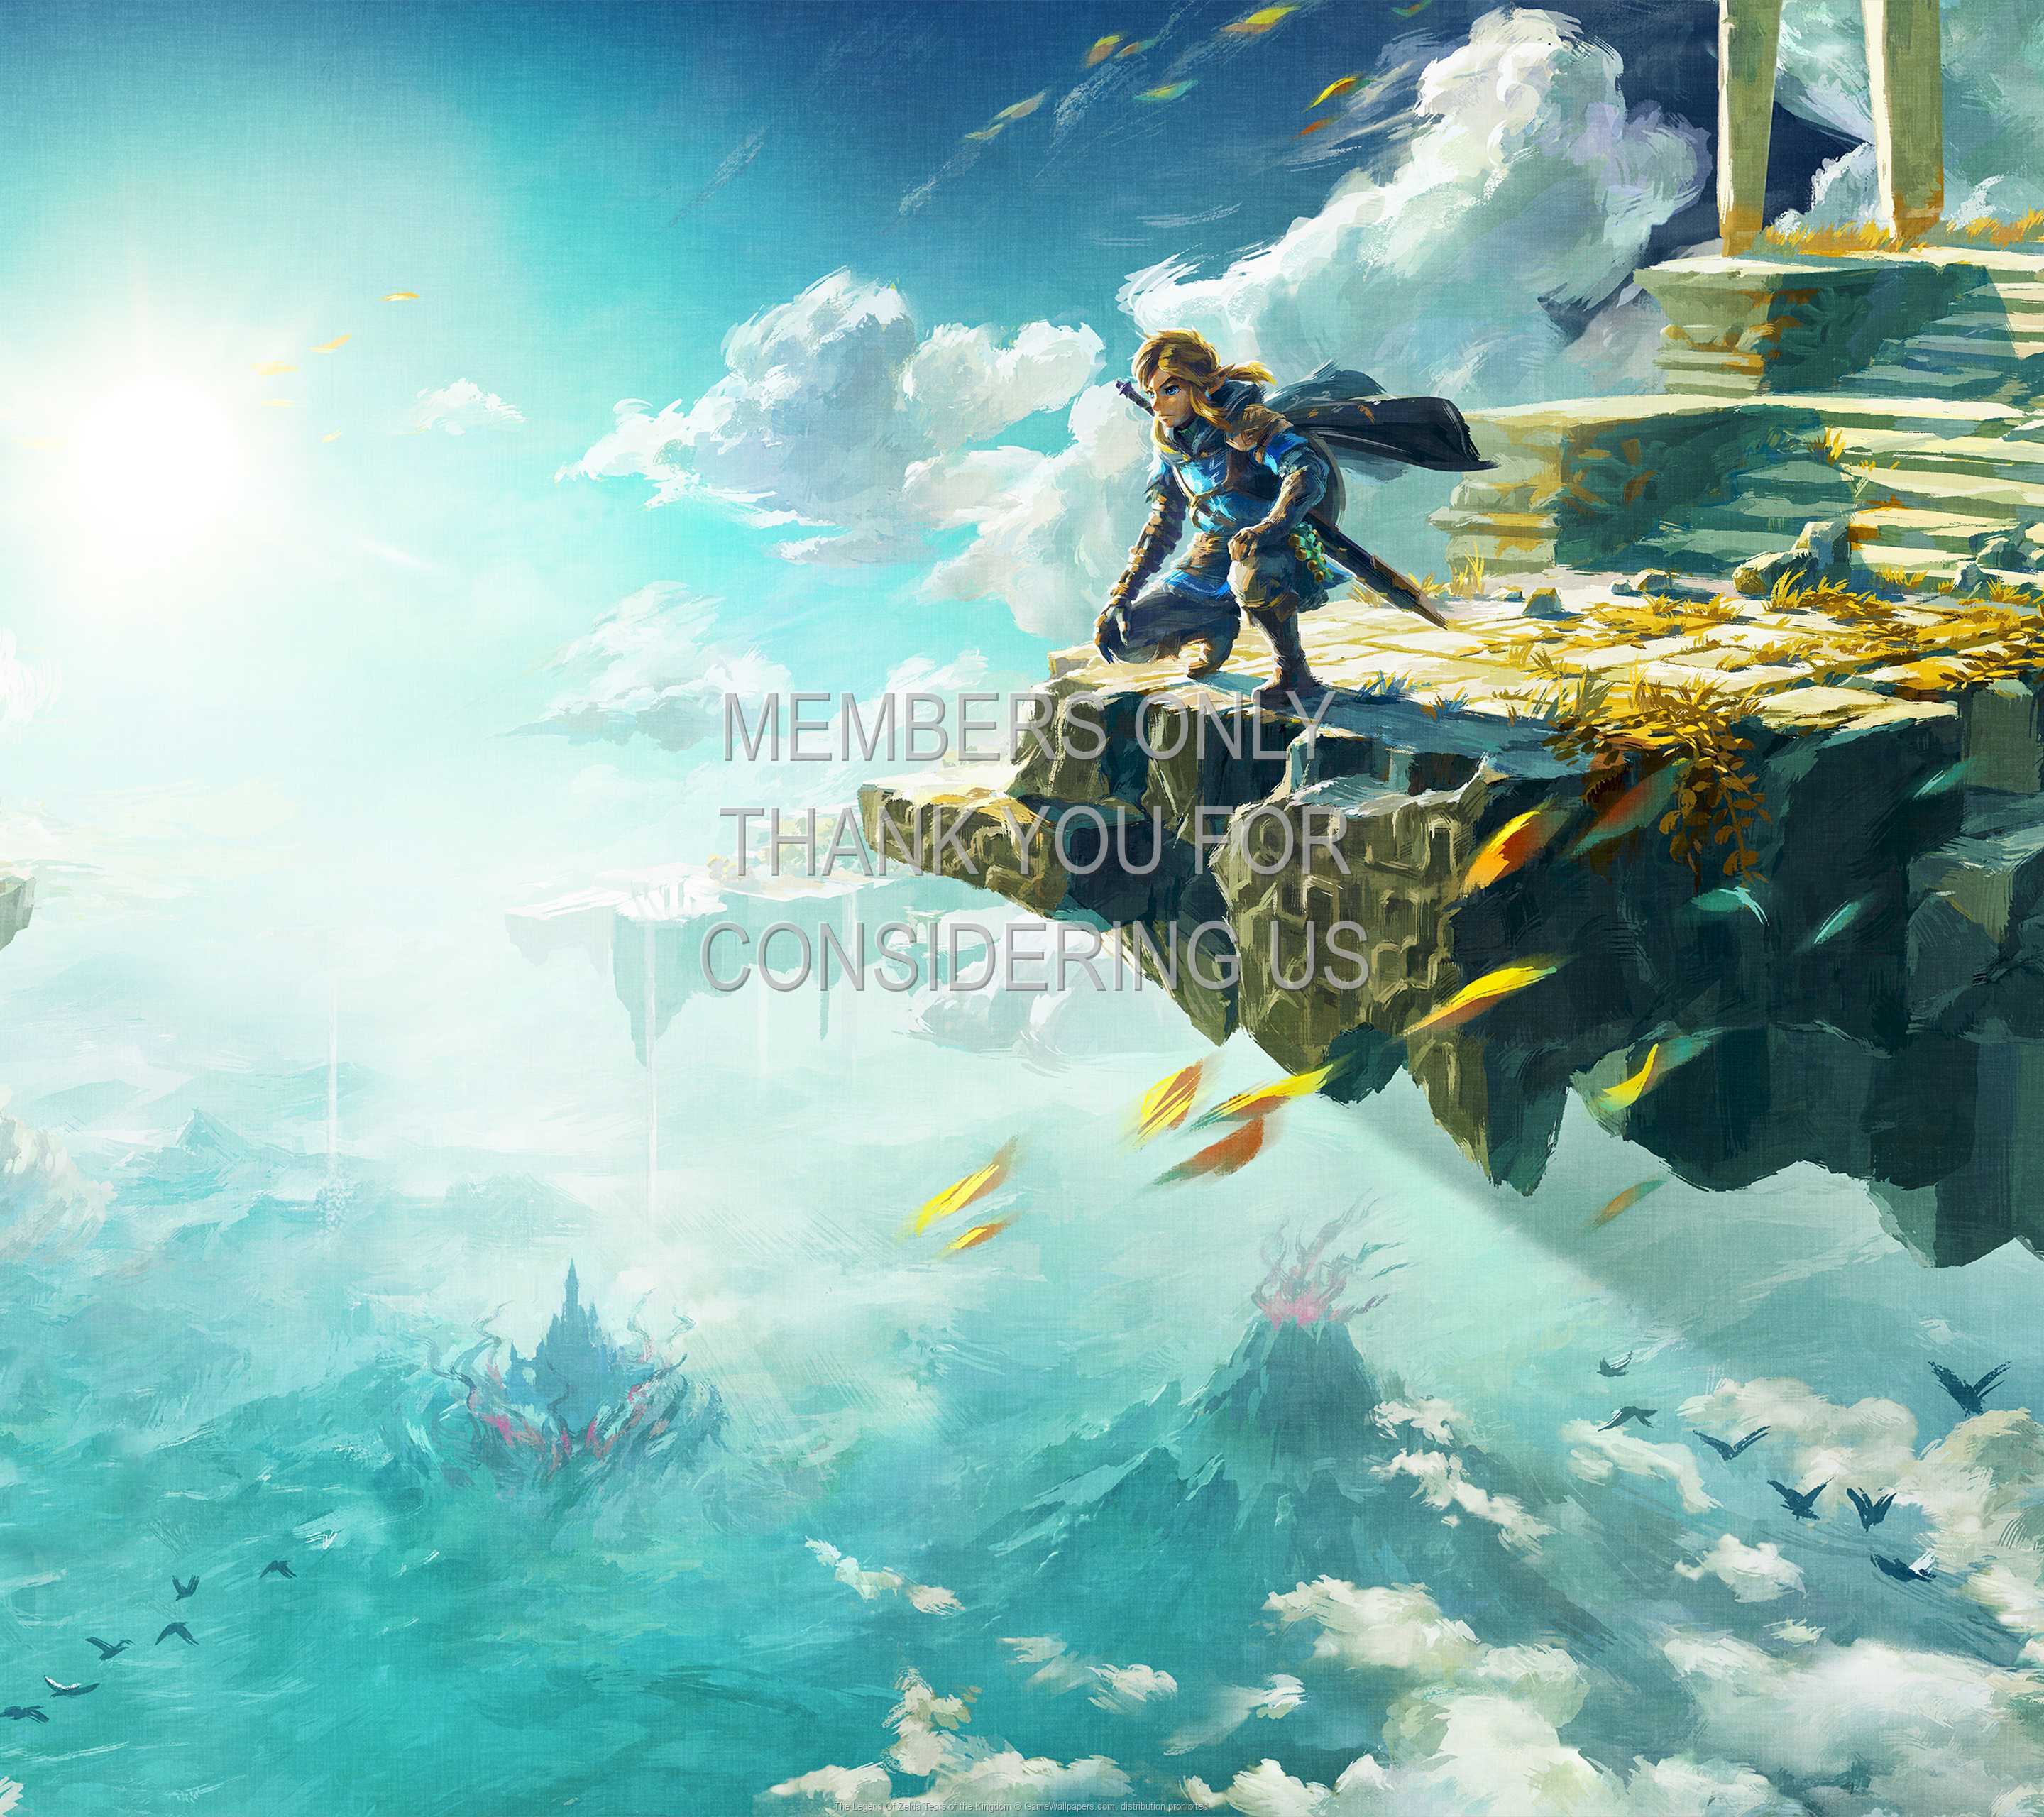 The Legend Of Zelda: Tears of the Kingdom 1440p Horizontal Mobile wallpaper or background 01